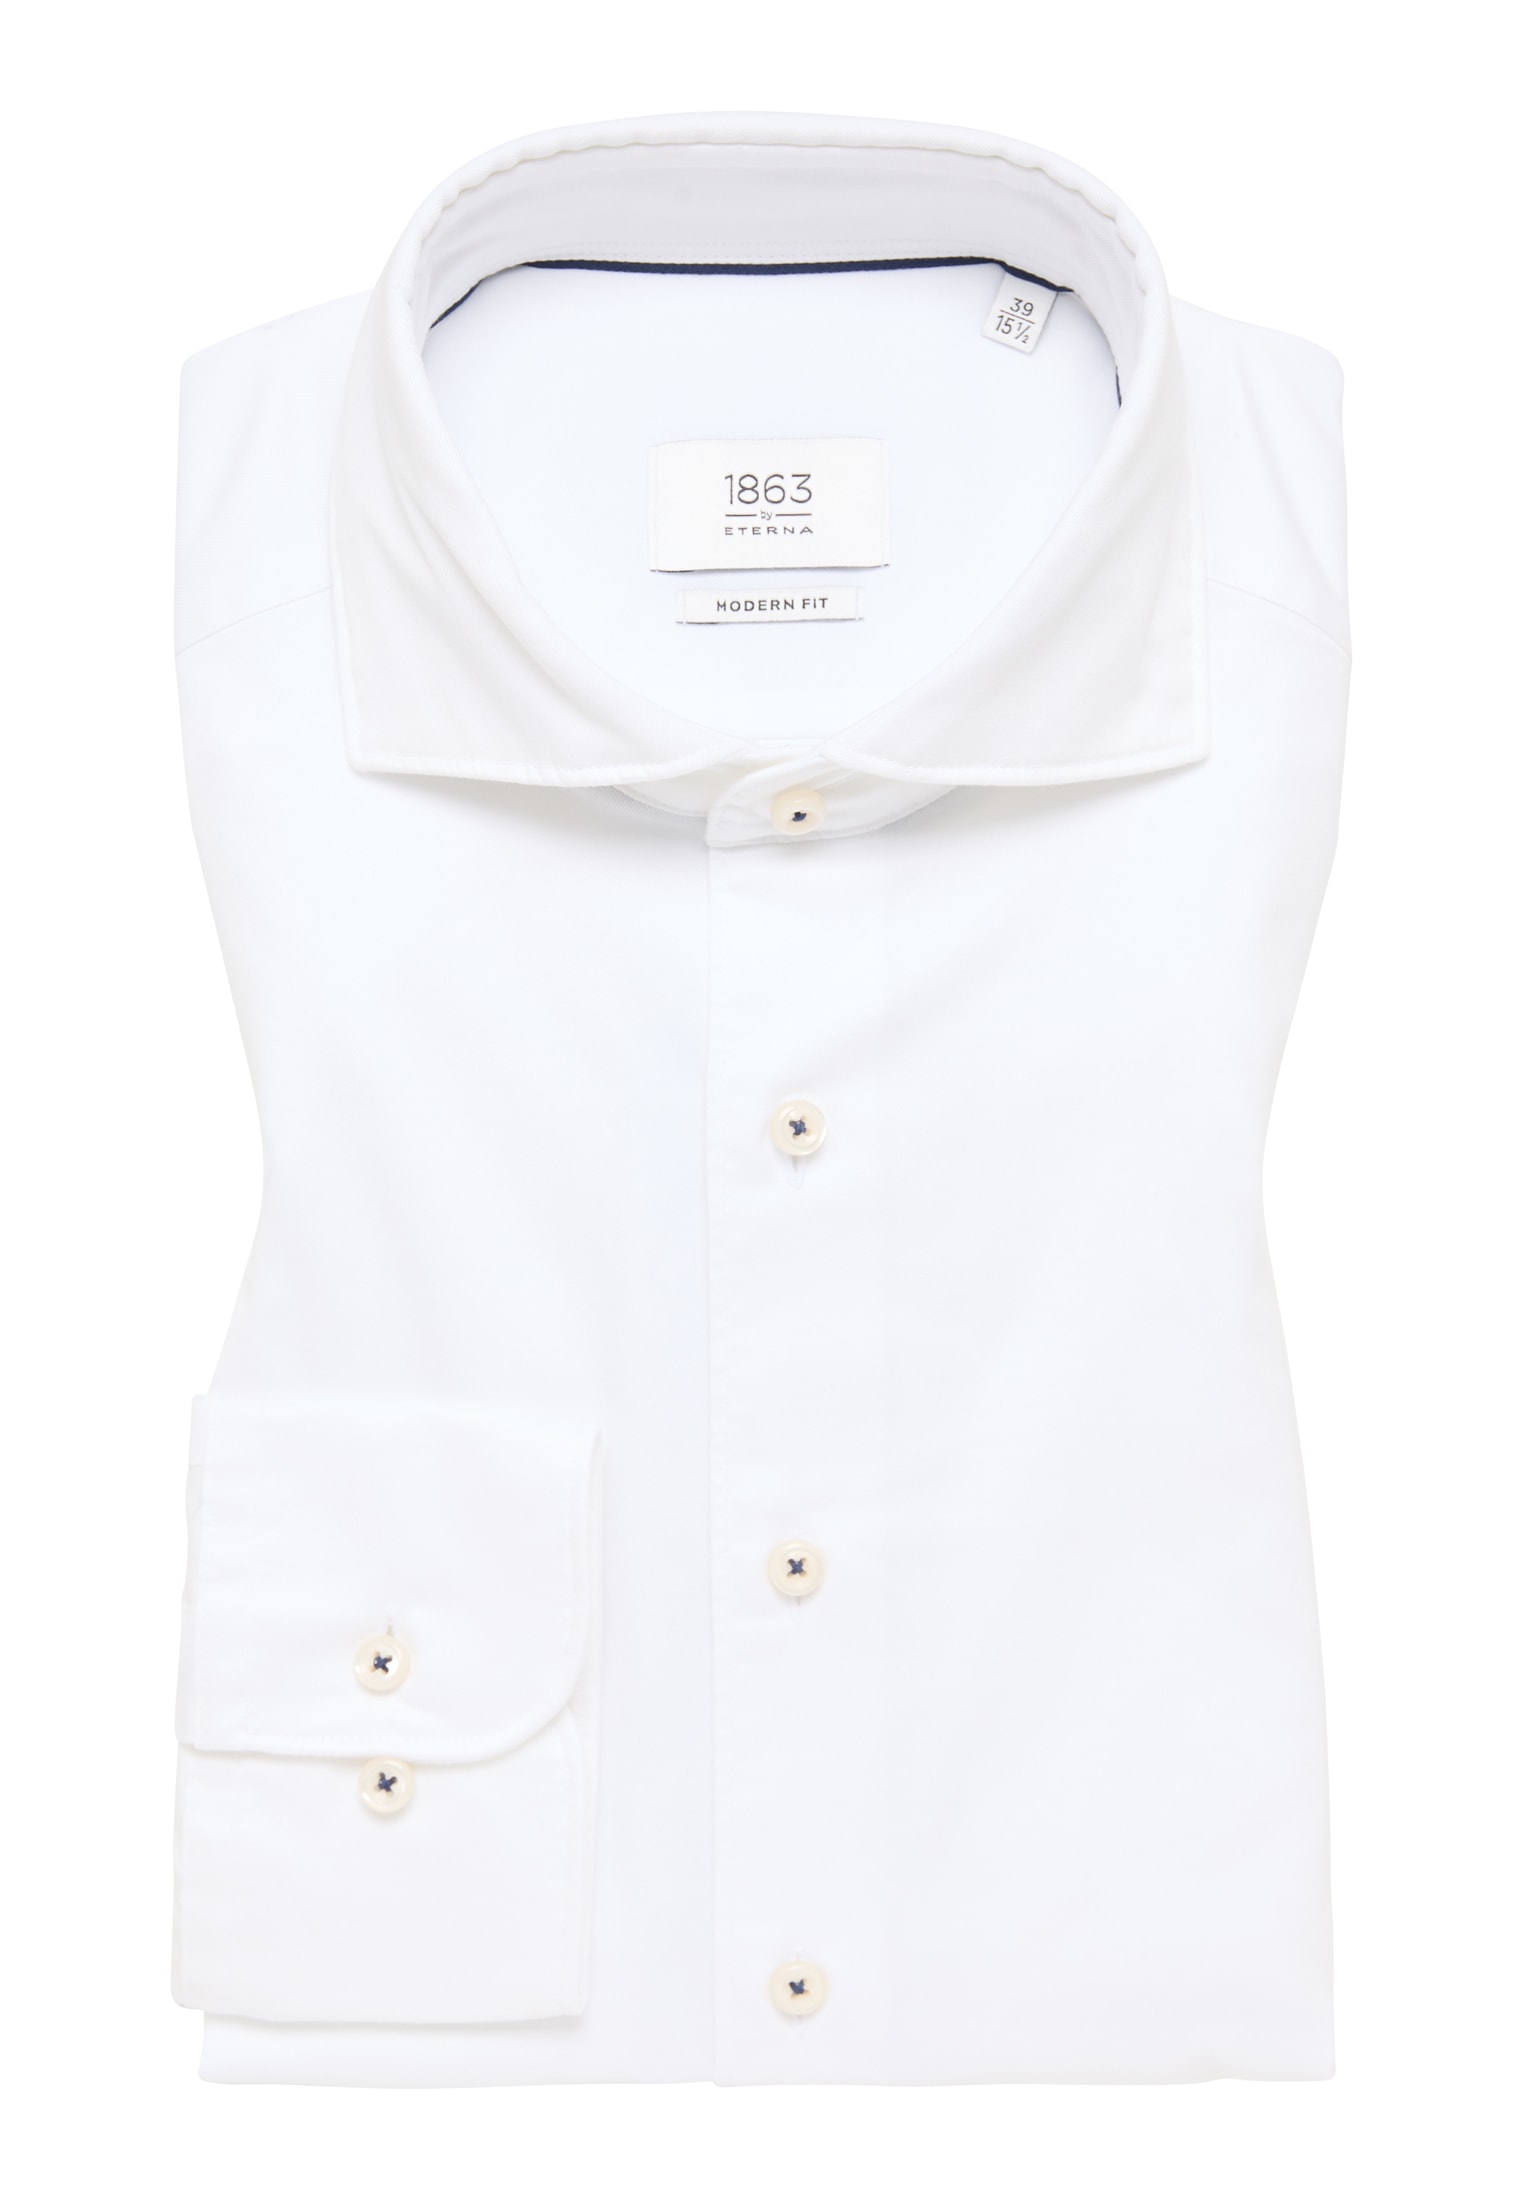 MODERN FIT Soft Luxury | | unifarben 43 in 1SH03488-00-02-43-1/1 off-white Shirt Langarm | off-white 